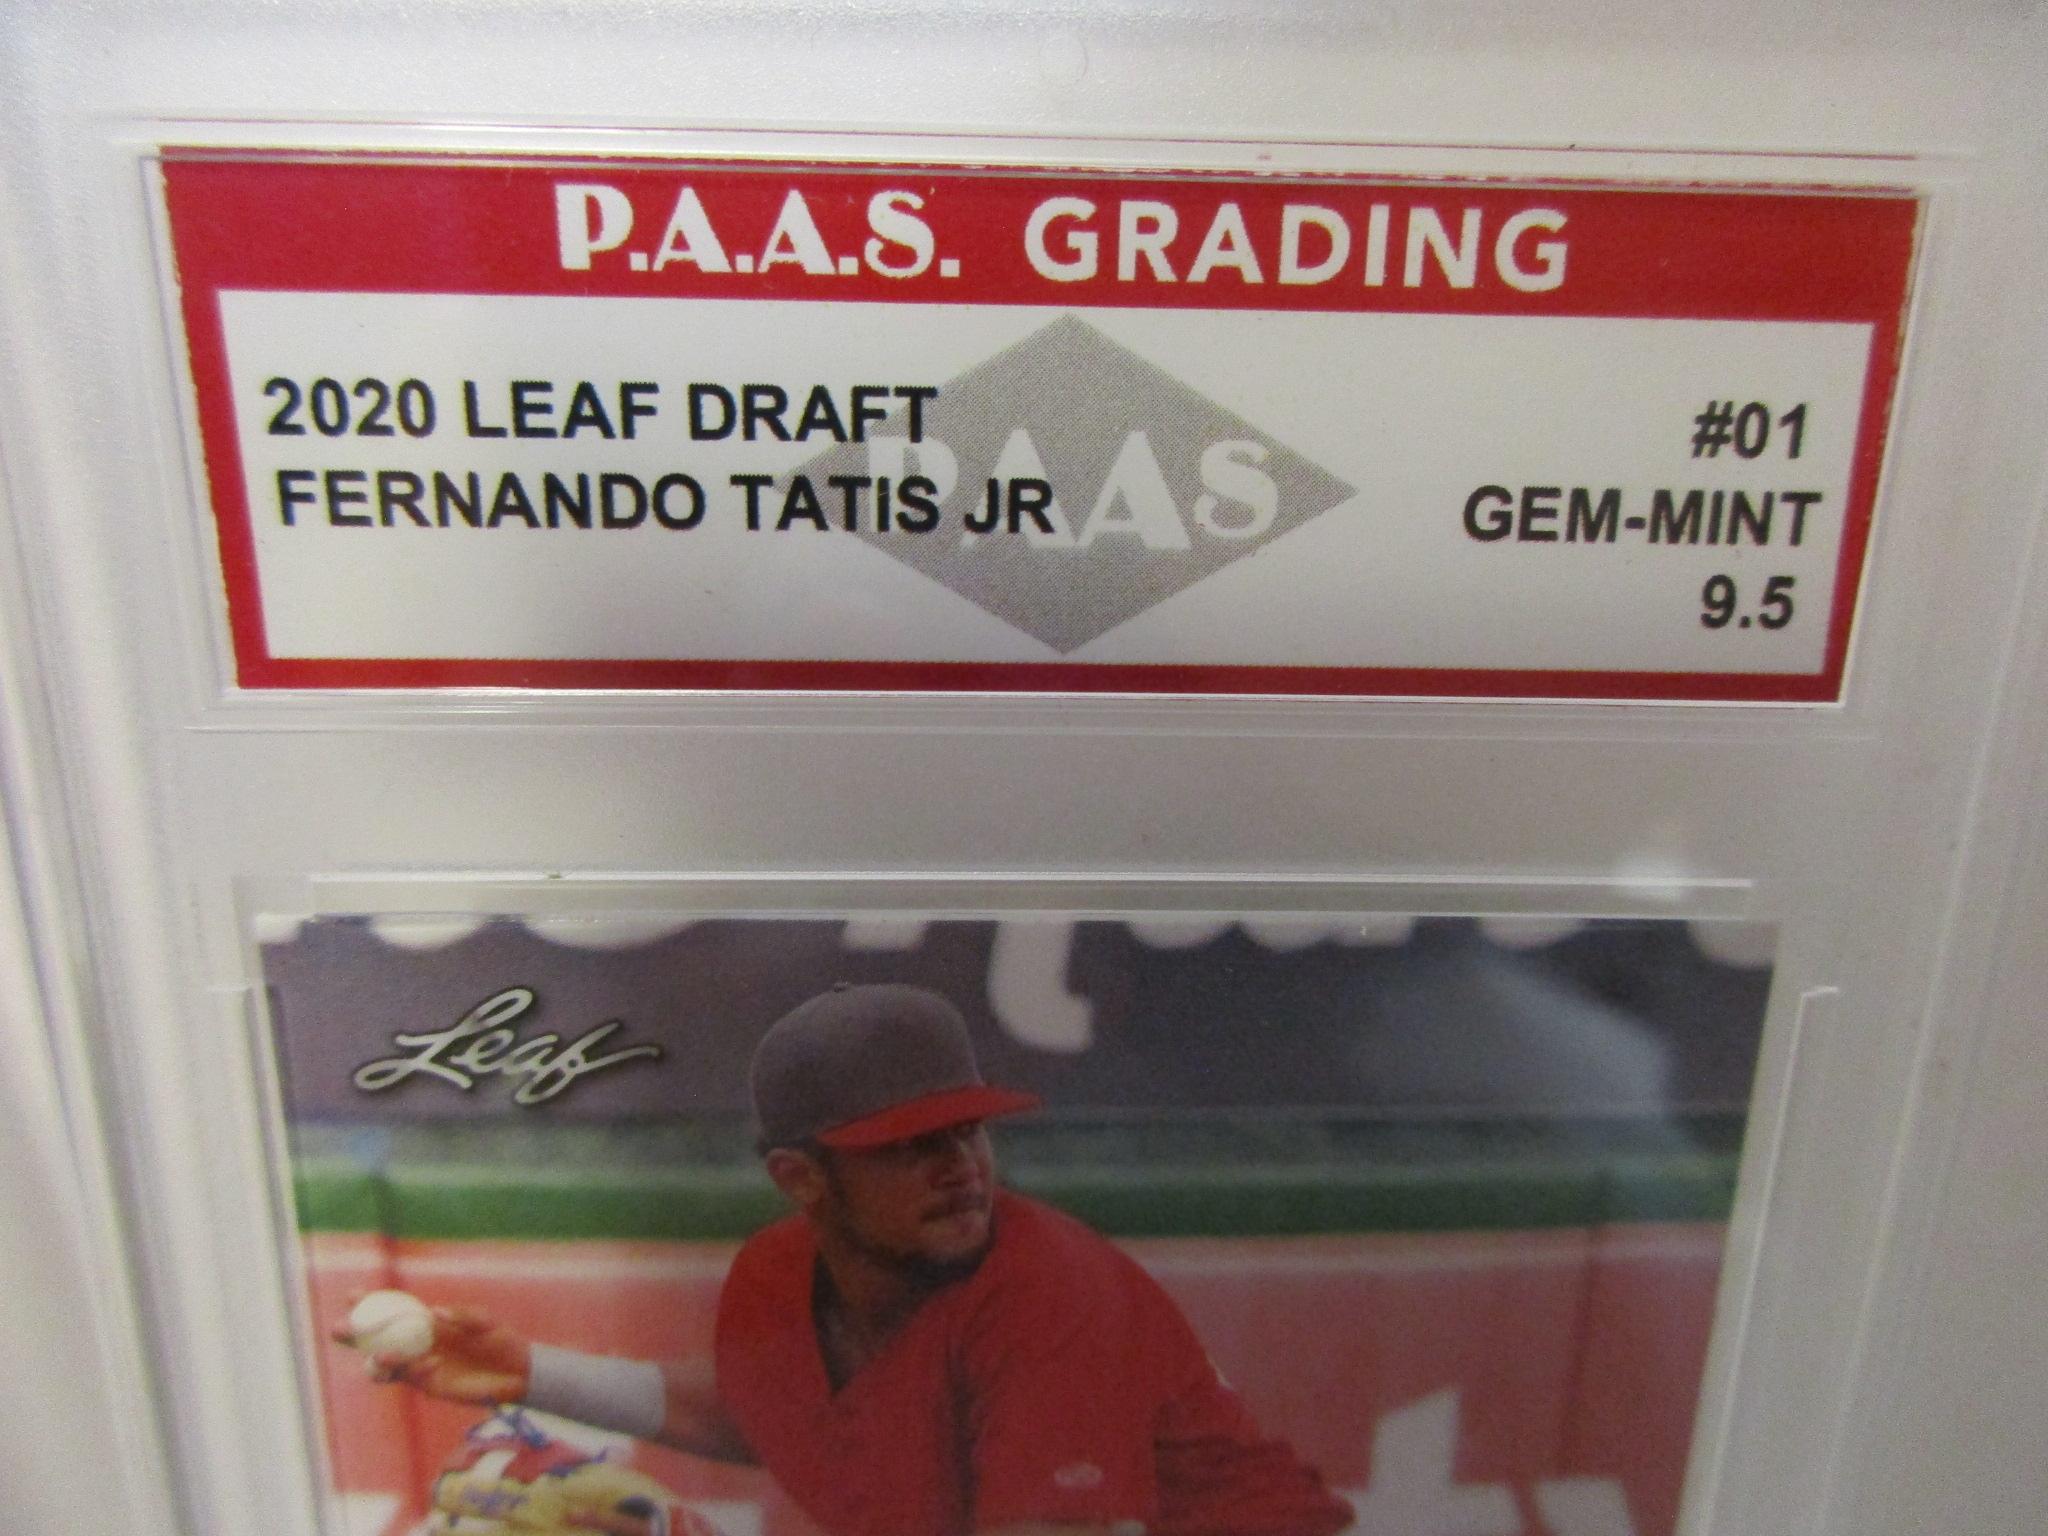 Fernando Tatis Jr  2020 Leaf Draft #01 graded PAAS Gem Mint 9.5